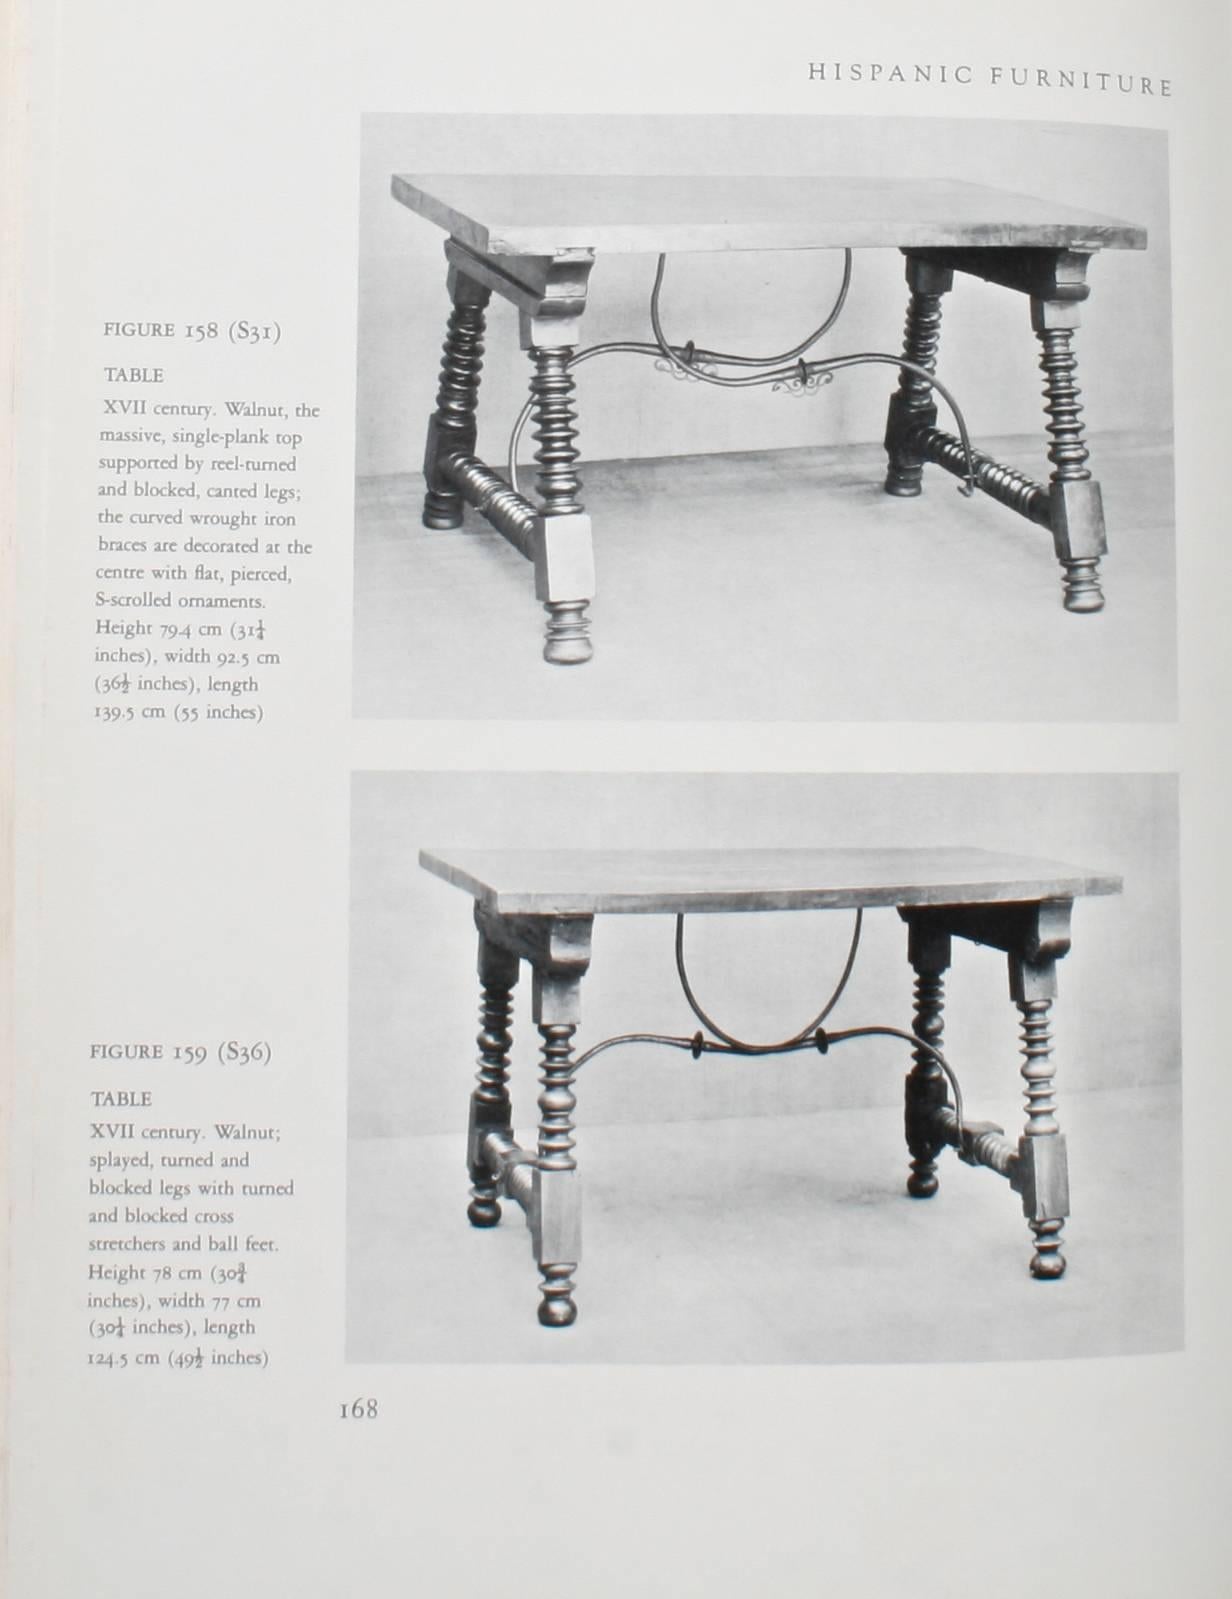 20th Century Hispanic Furniture by Grace Hardenddorff Burr